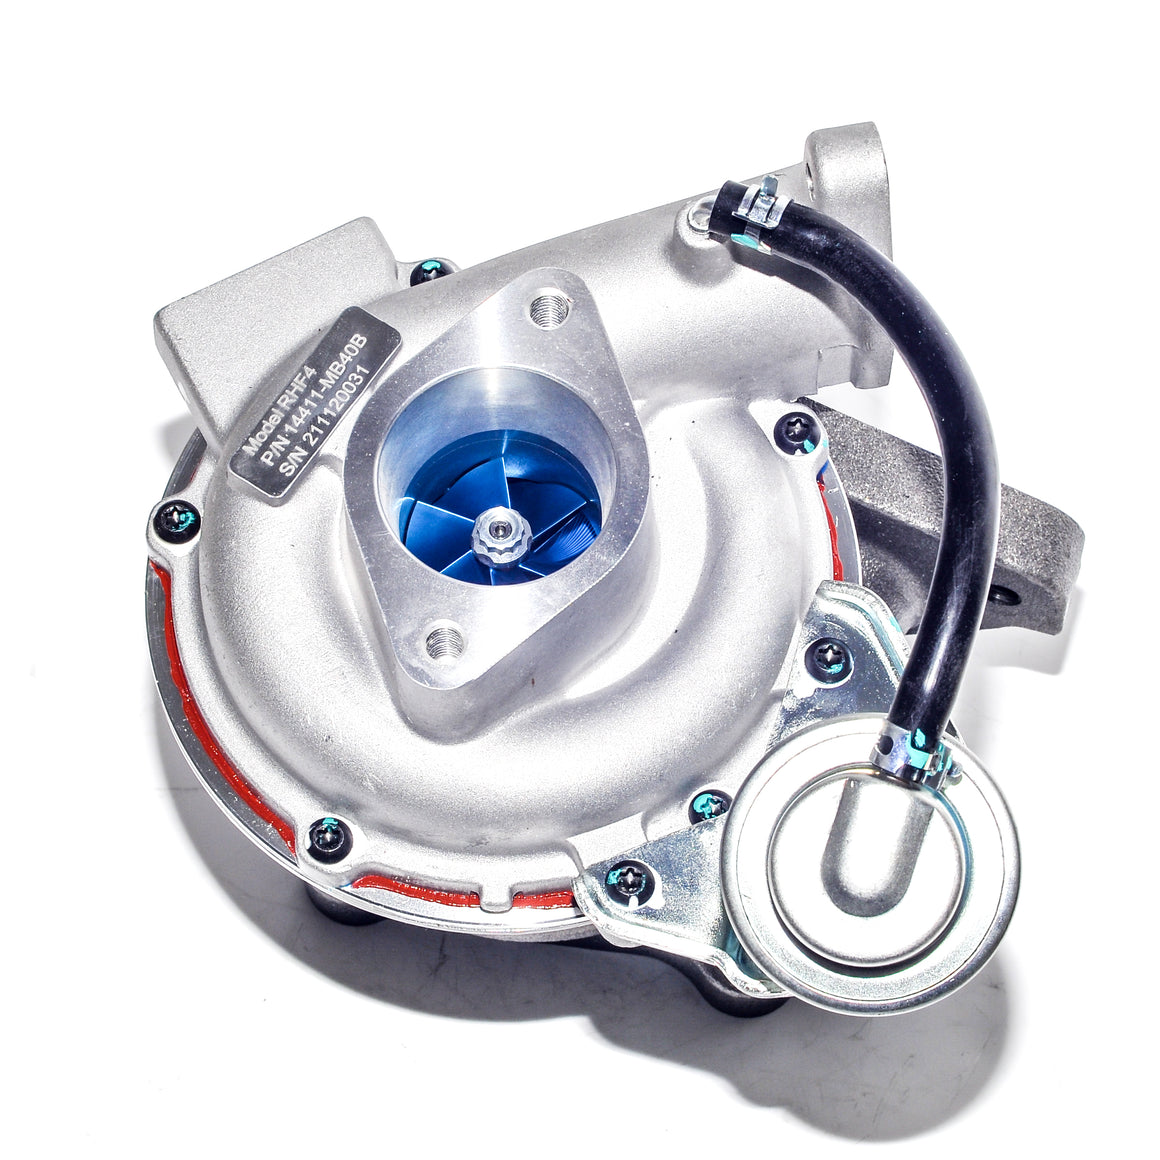 CCT Stage One Upgrade Hi-Flow Turbocharger To Suit Nissan Navara D22 YD25 2.5L MB40B